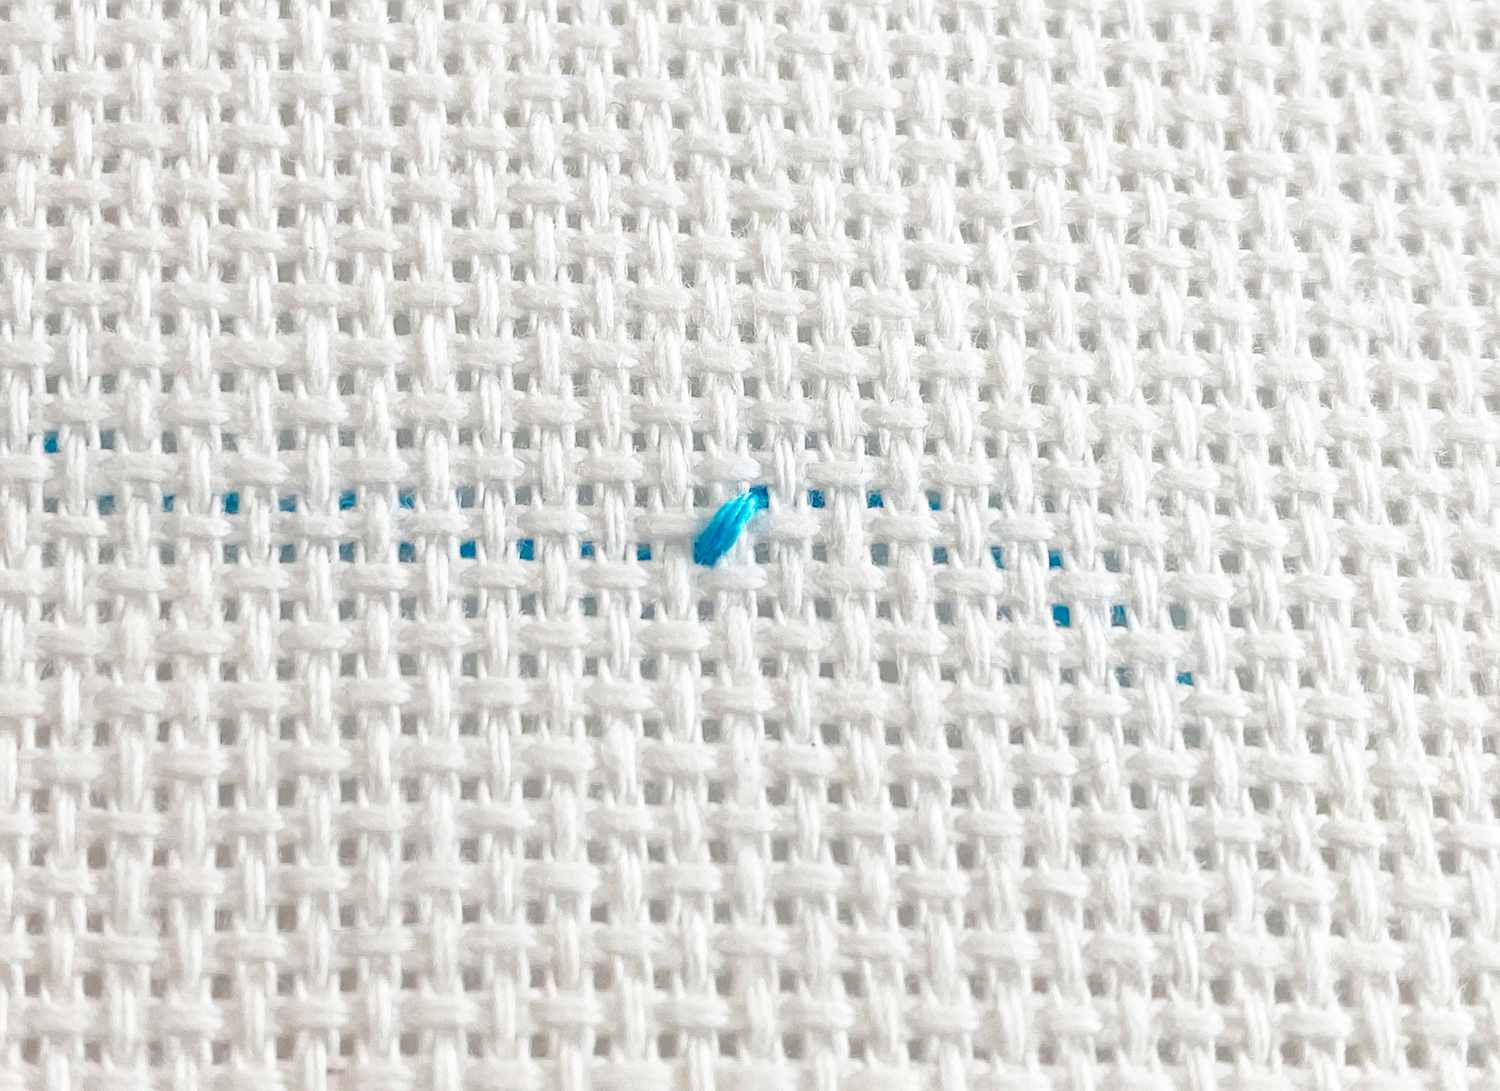 A diagonal made with blue thread